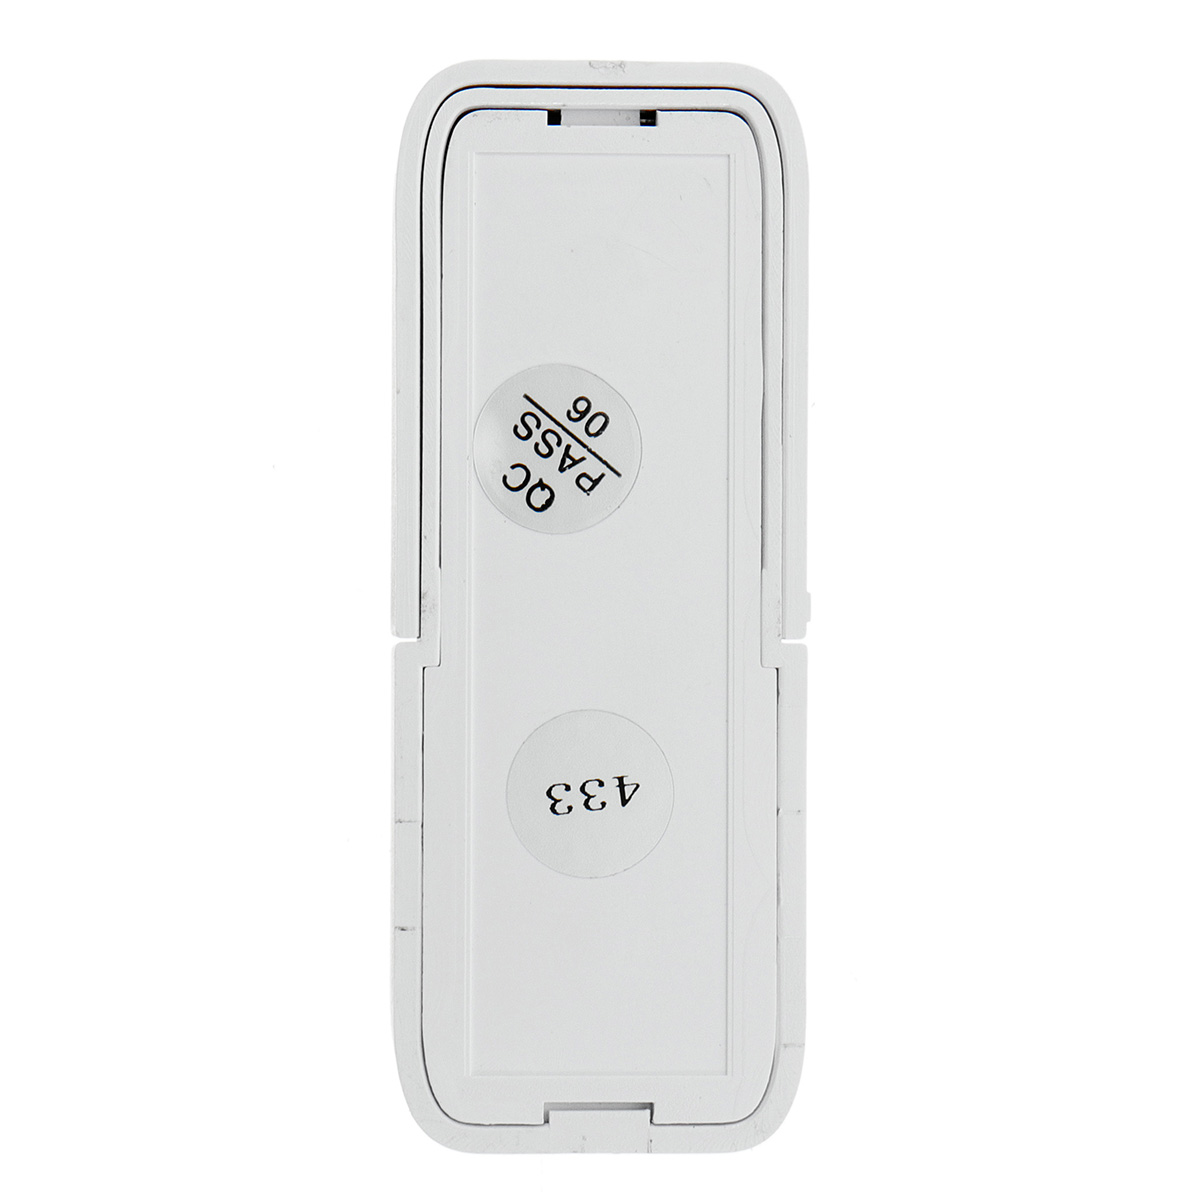 DY-MC100B-Wireless-Door-Window-Detector-Sensor-Alarm-433MHz-for-Security-Alarm-System-1266532